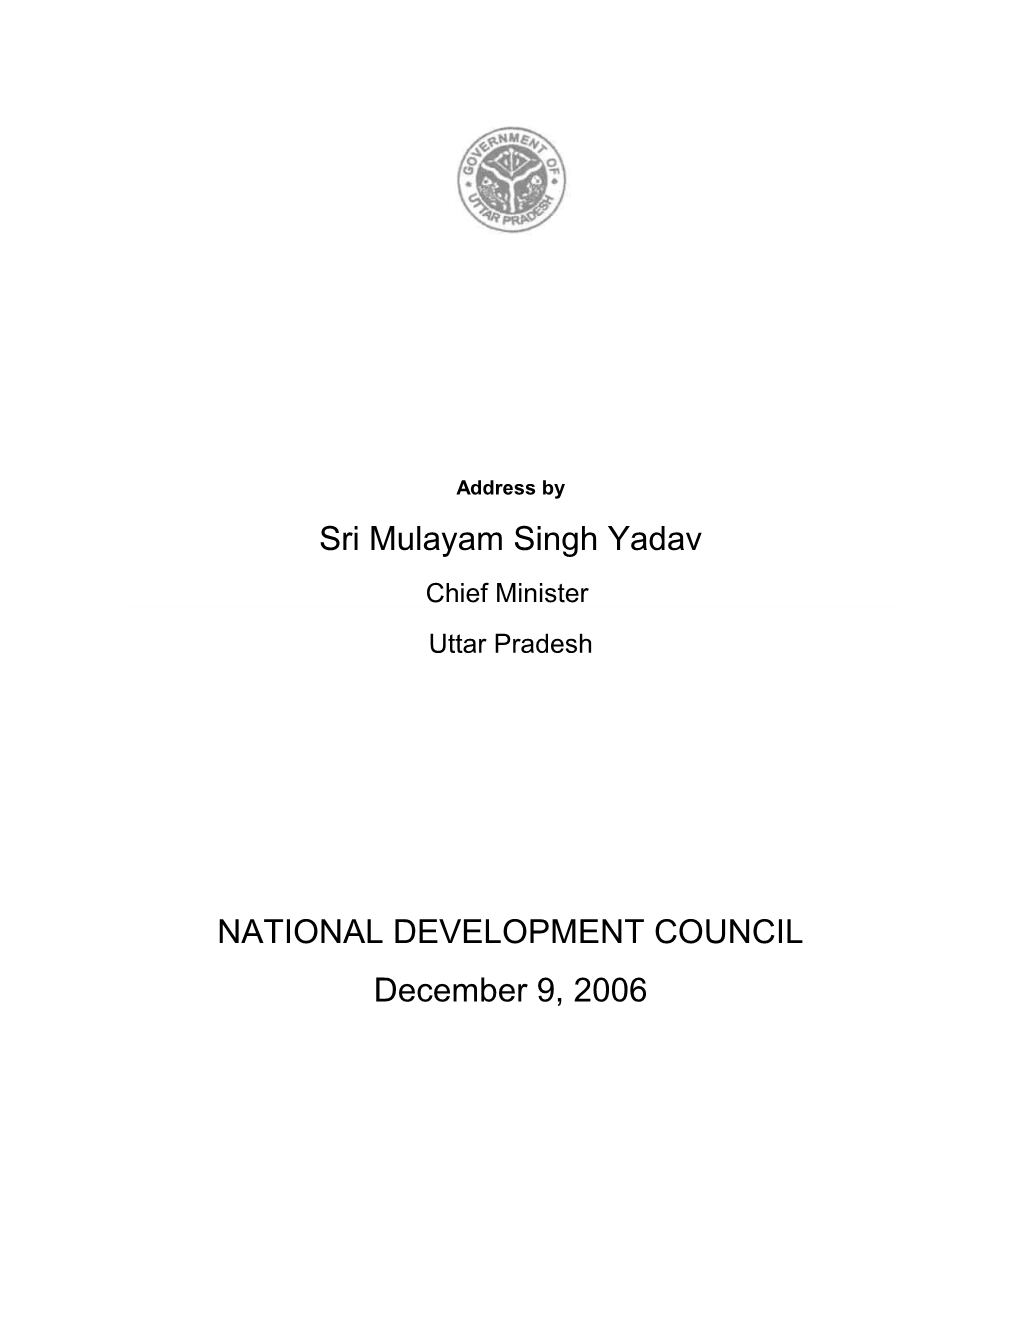 Sri Mulayam Singh Yadav